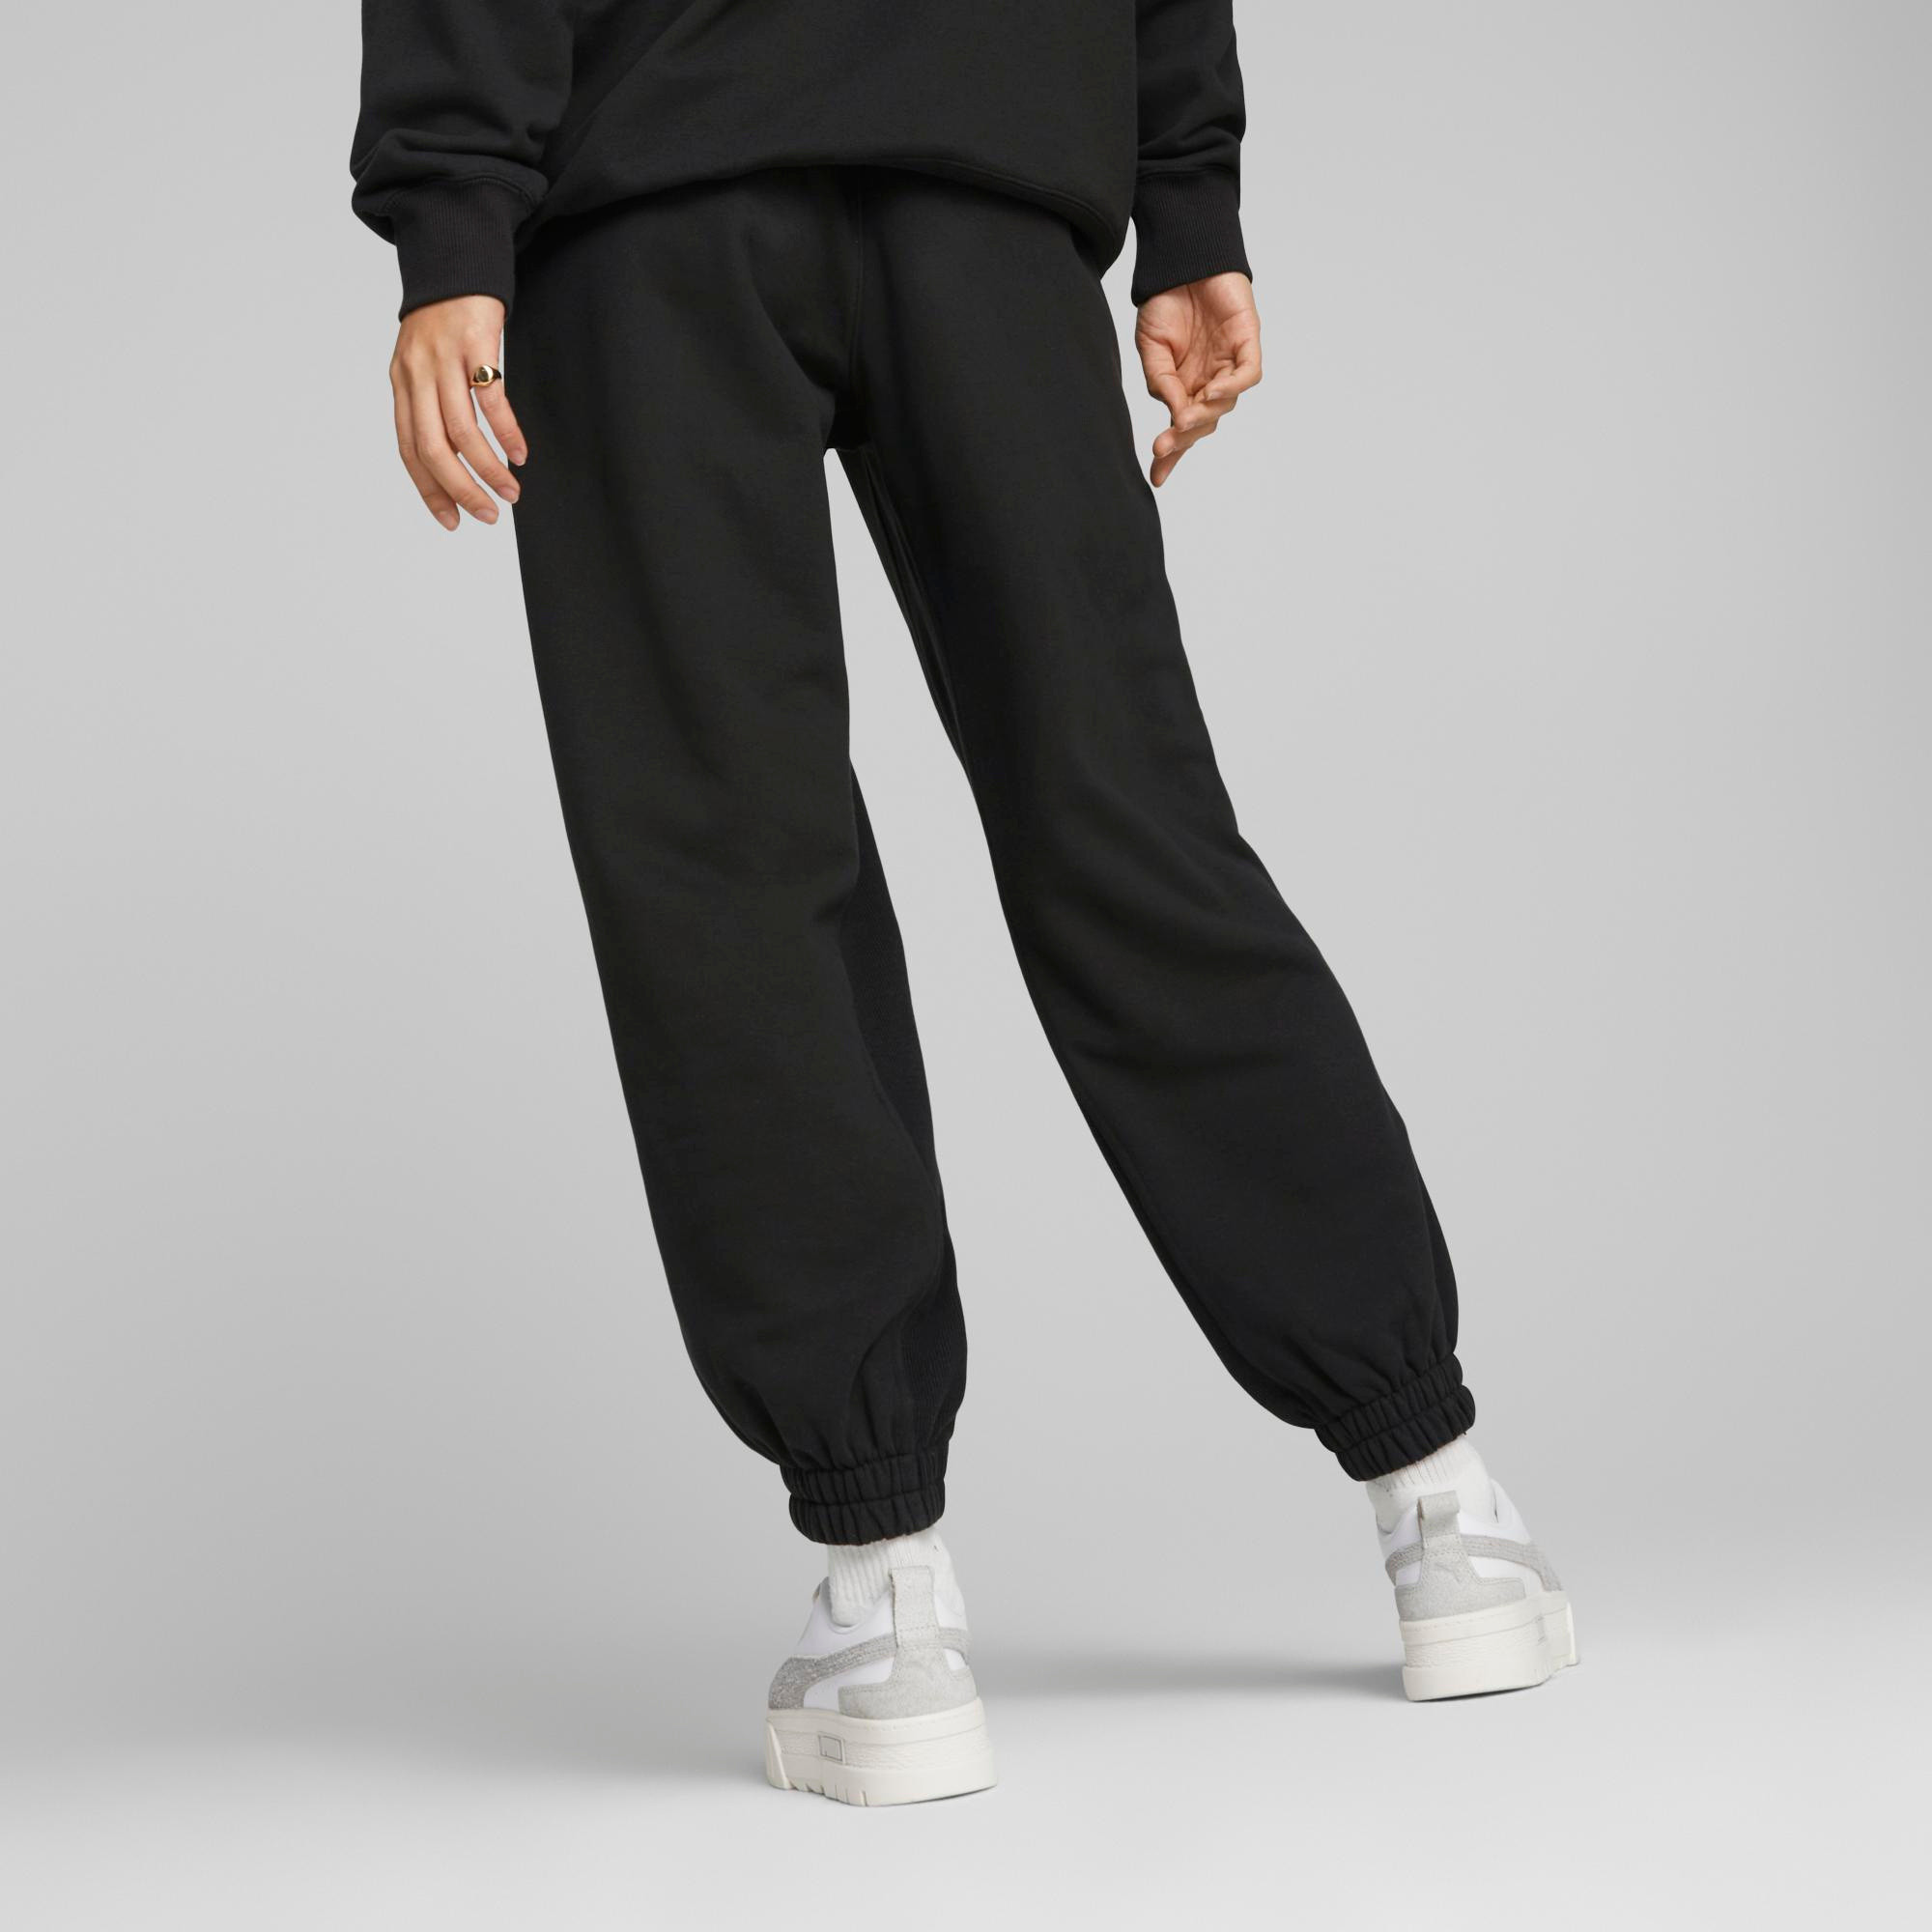 Puma - Downtown cotton sweatpants, Black, large image number 4